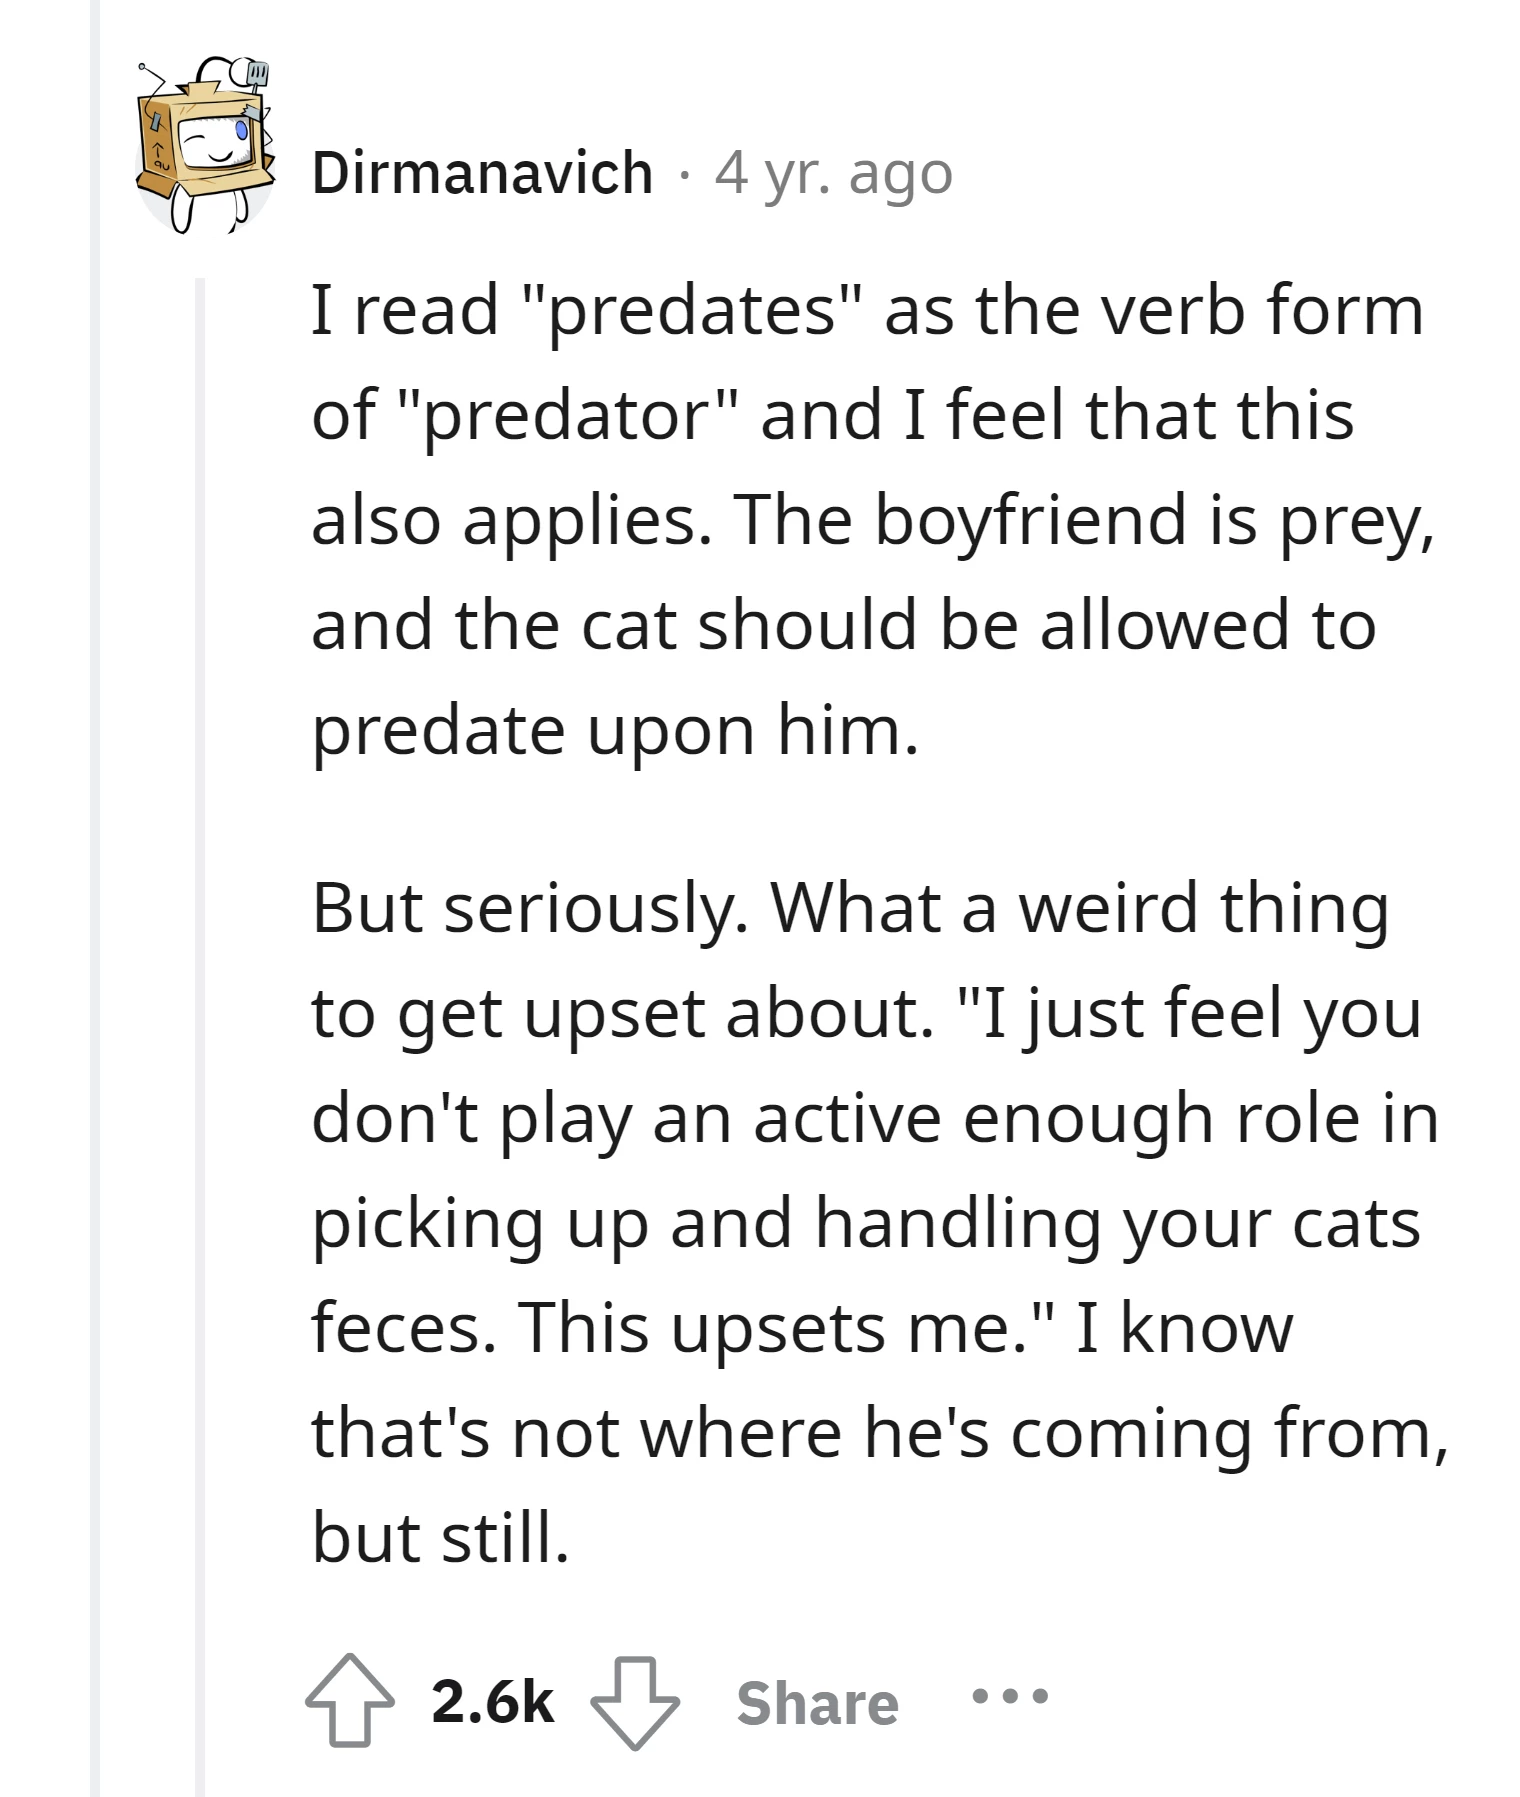 Commenter finds it odd that the boyfriend's upset about the cat's toilet habits